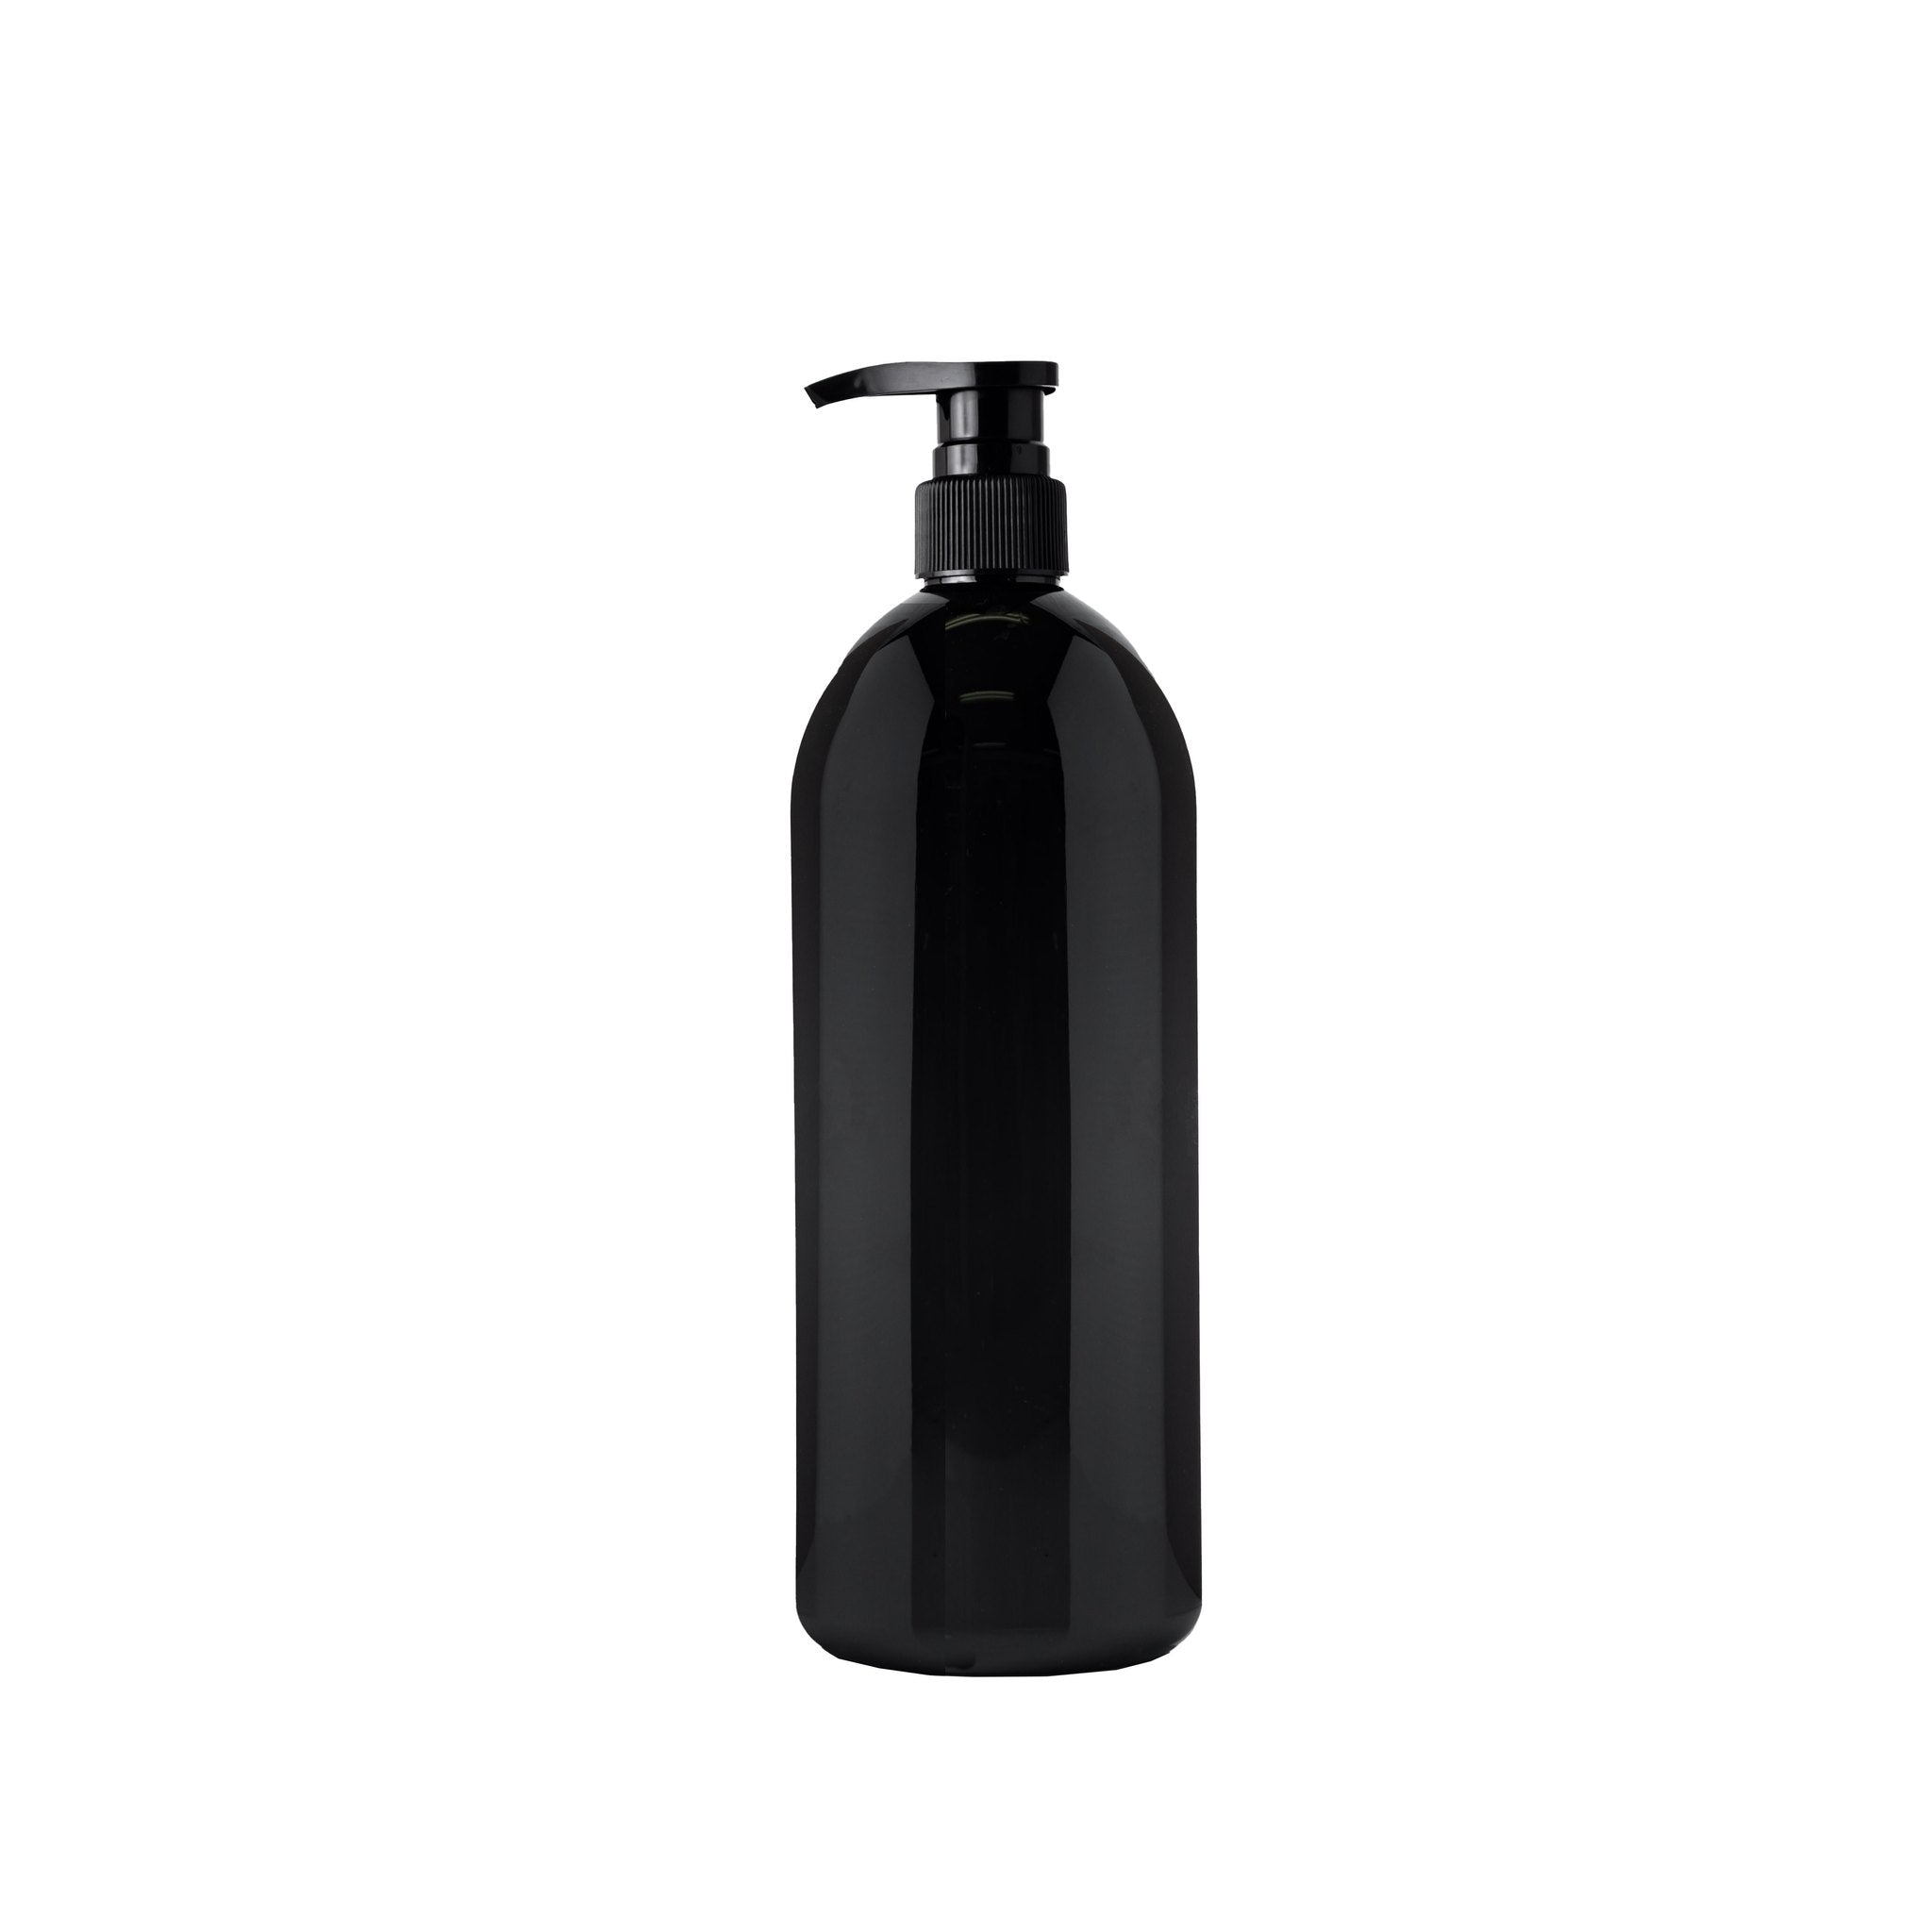 Black plastic pump bottles